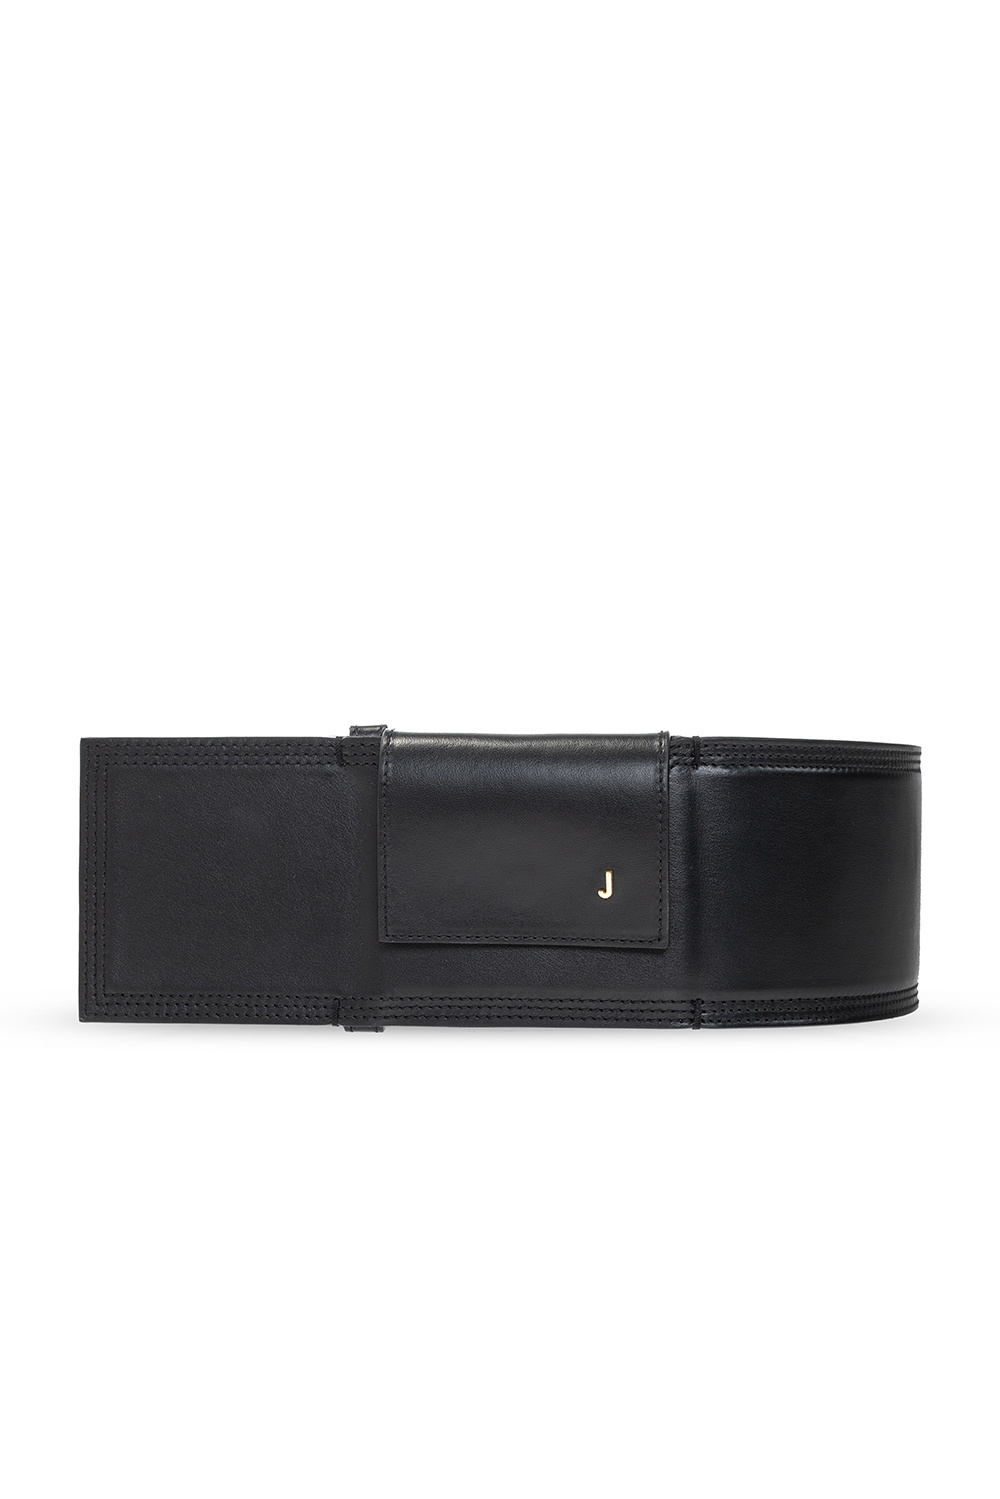 Jacquemus ‘Pichoto’ leather belt